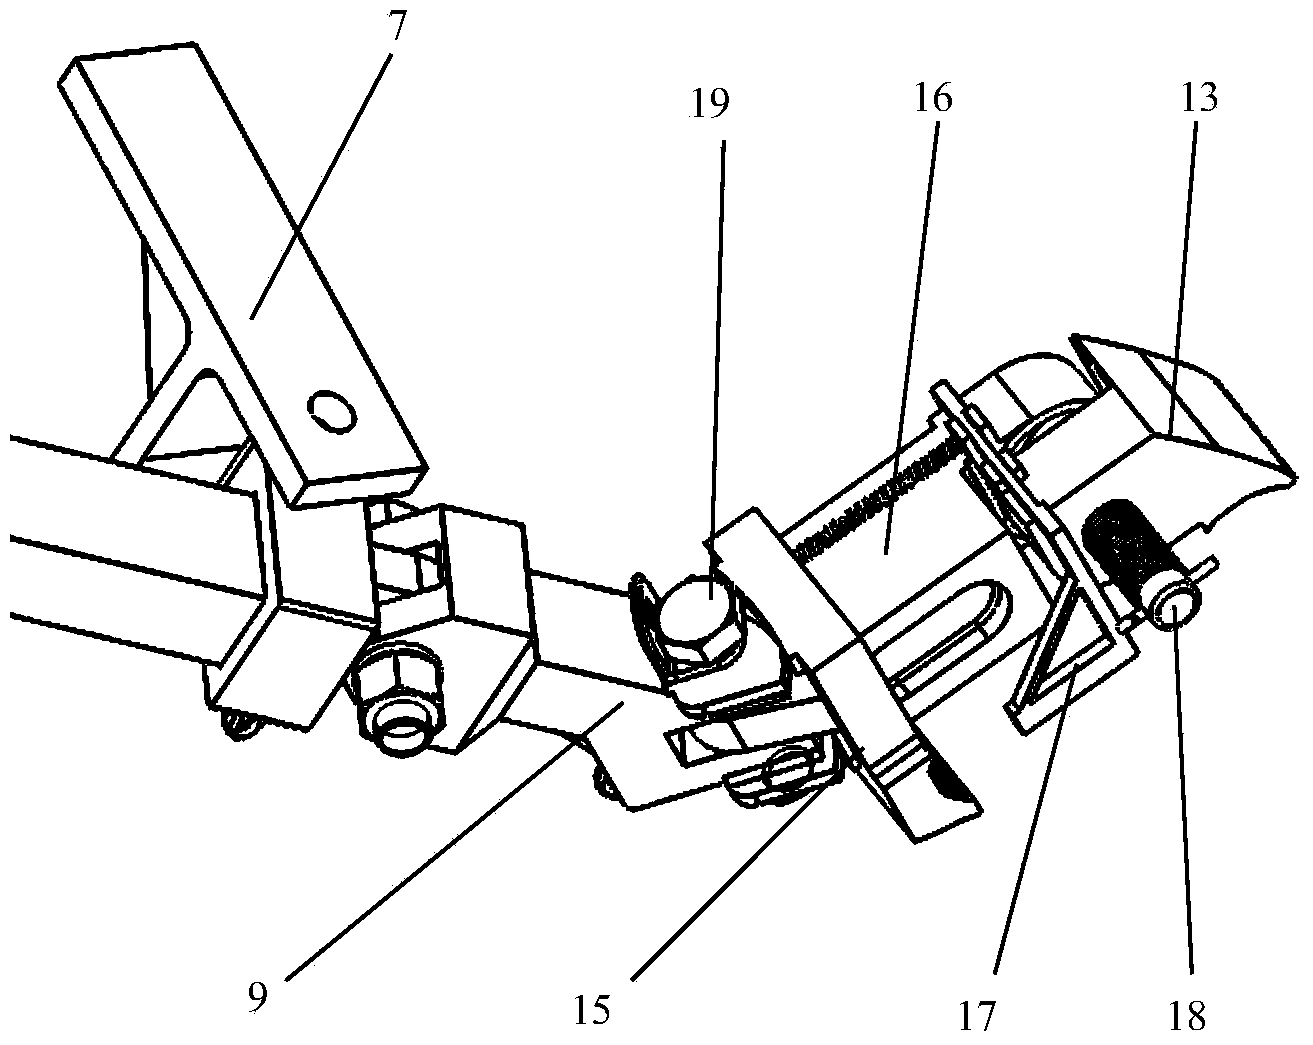 Rail clamping self-locking type anti-running device for mine vehicle